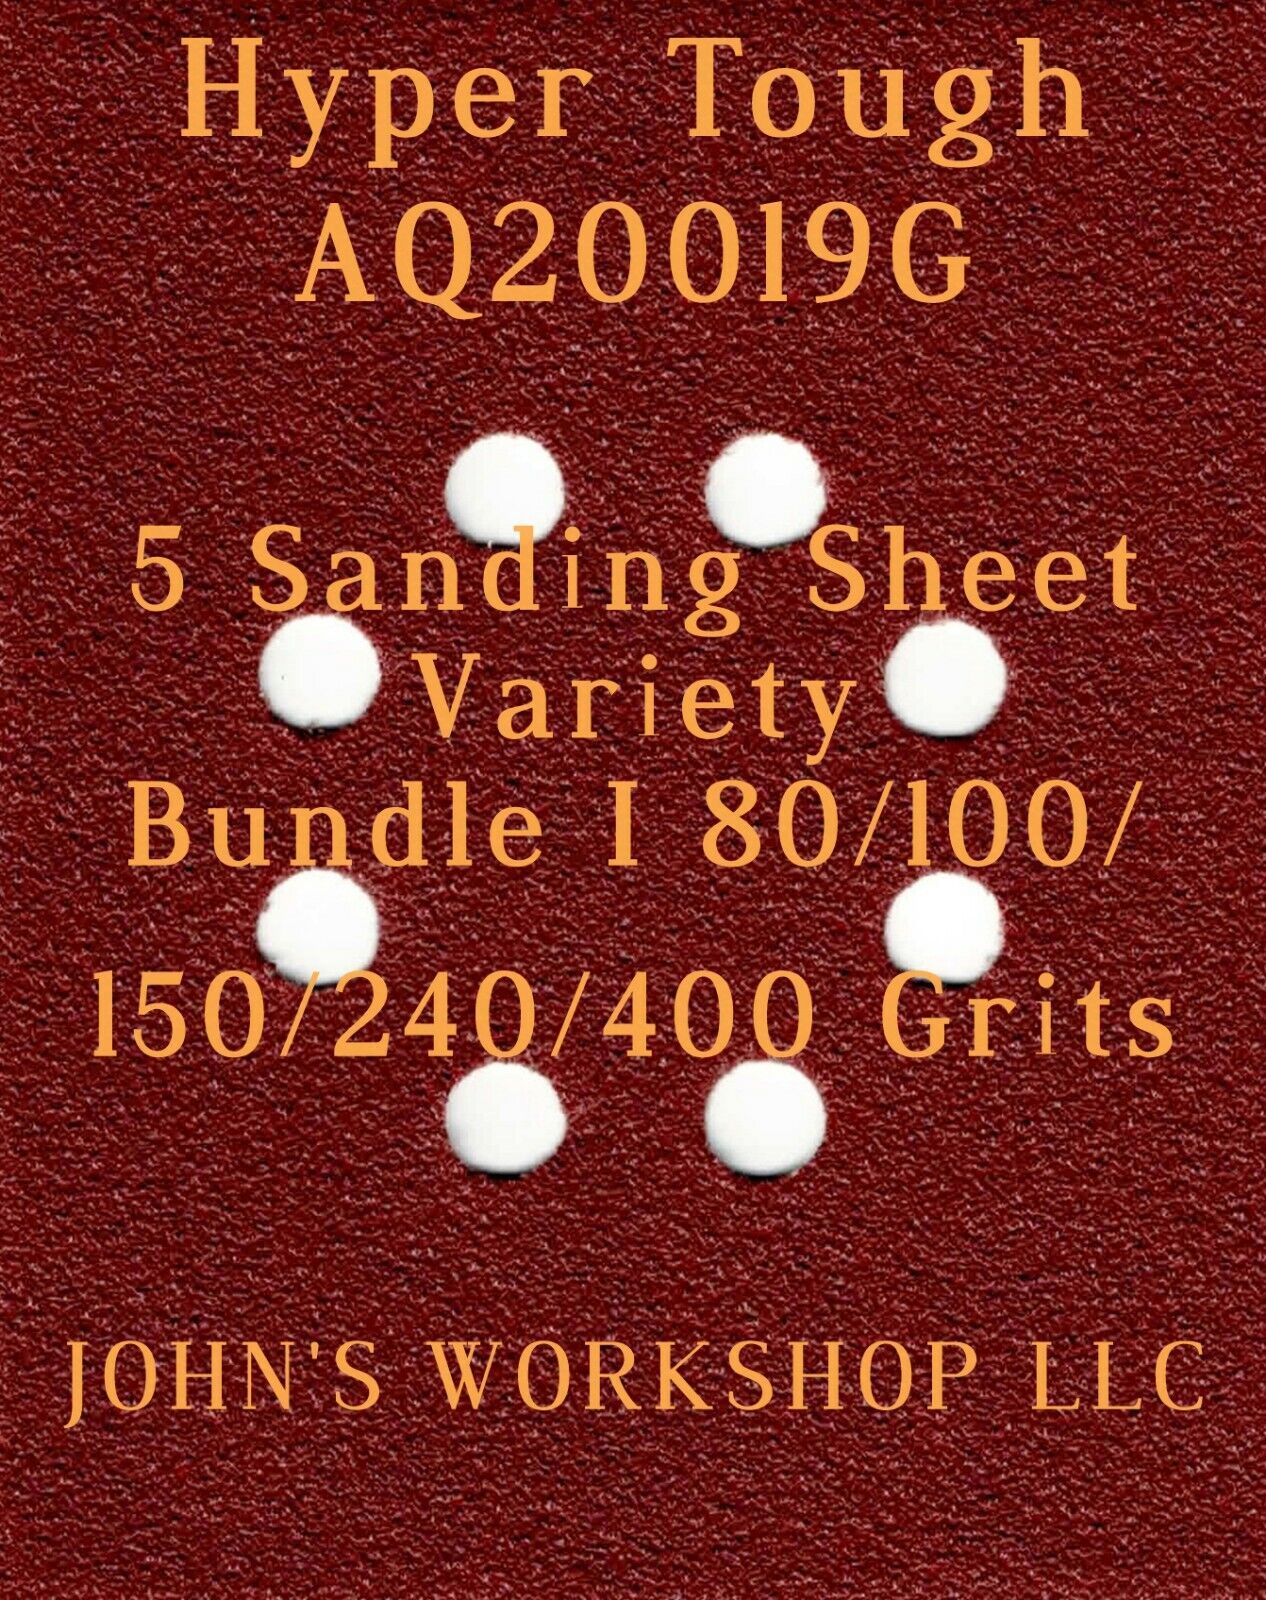 Hyper Tough AQ20019G - 80/100/150/240/400 Grits - 5 Sandpaper Variety Bundle I - $4.99